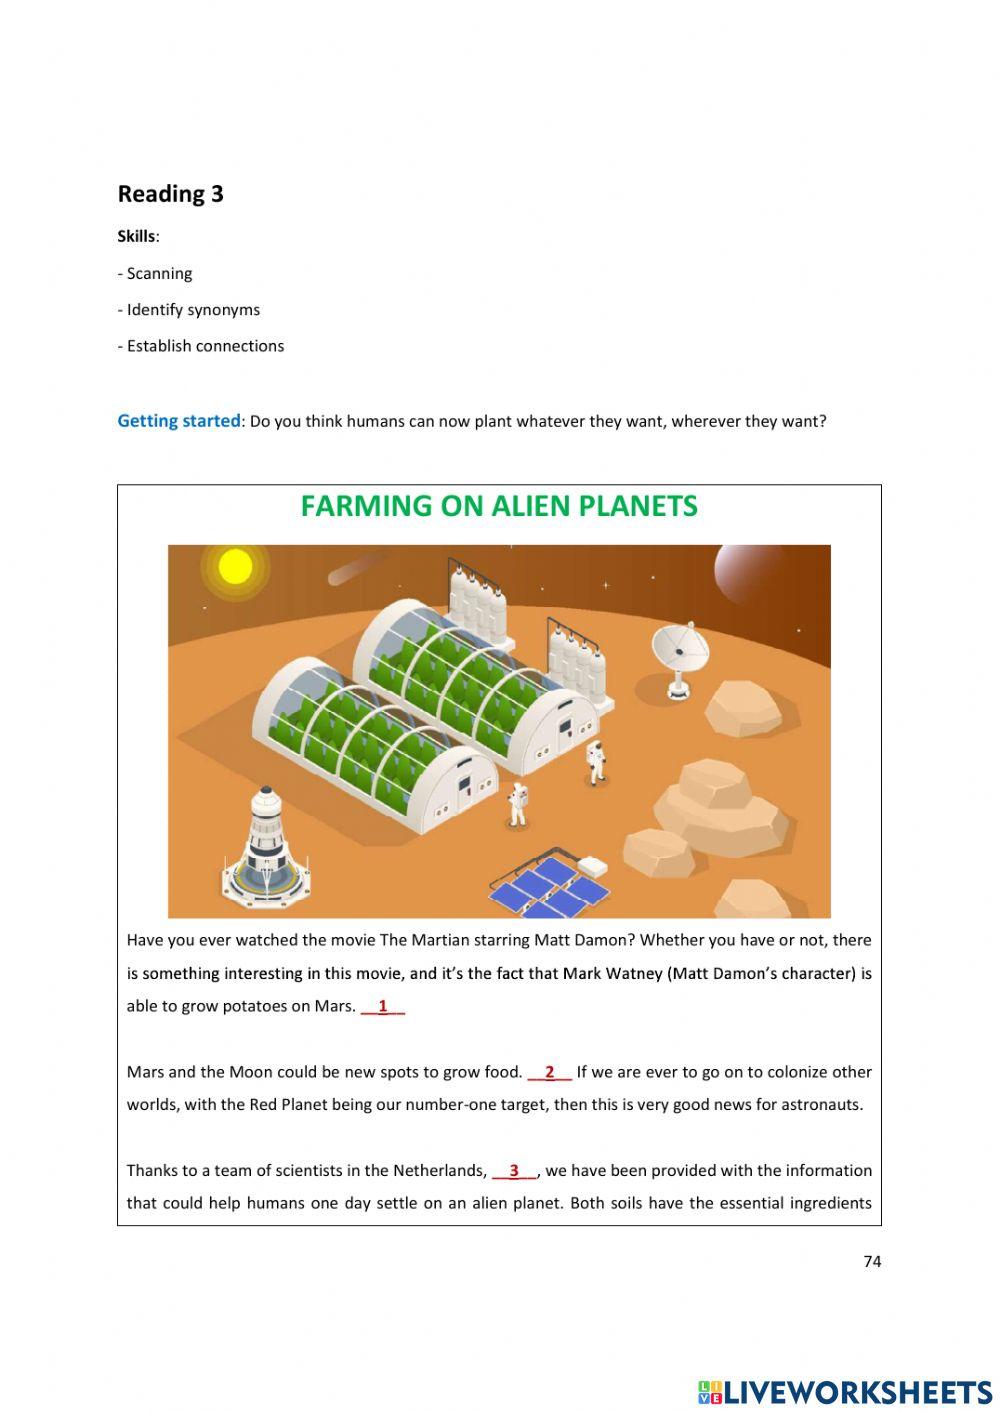 Unit 7 Reading 3 Farming on Alien Planets